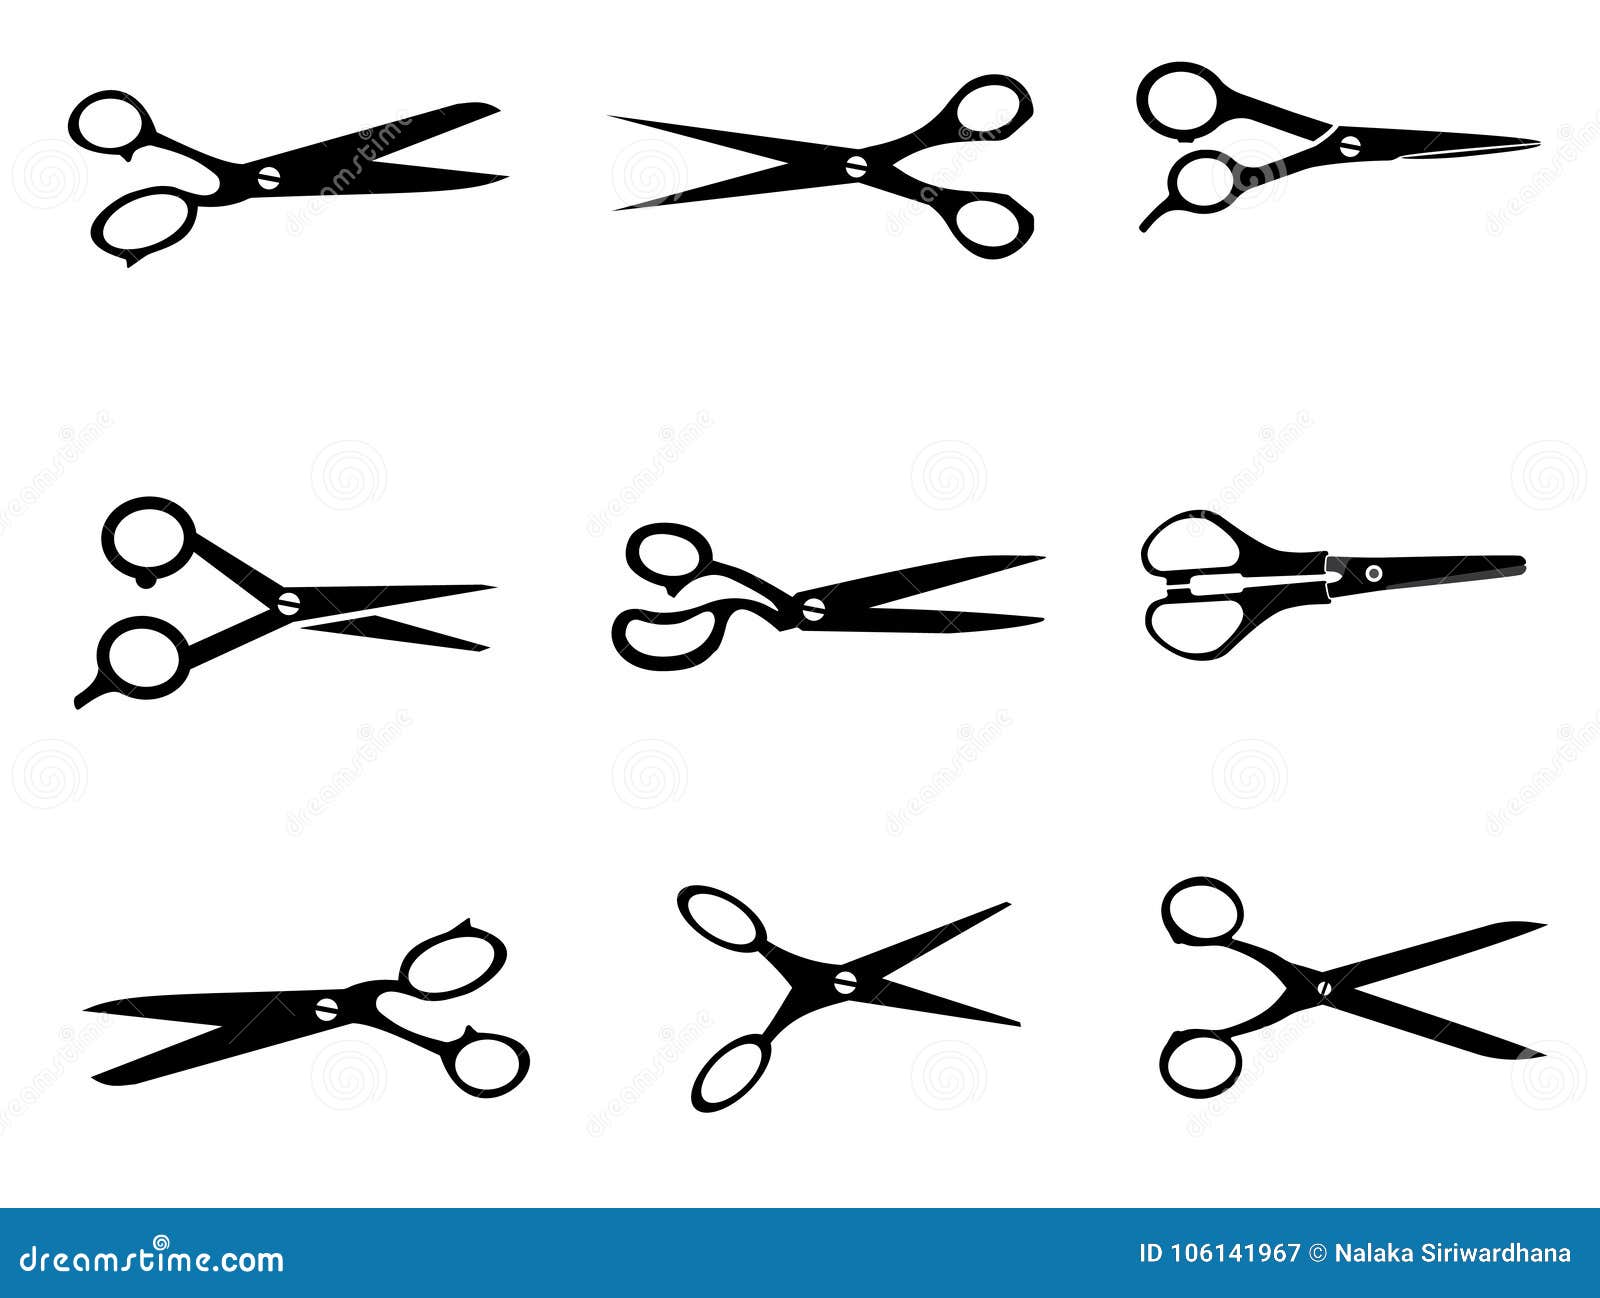  set of scissors